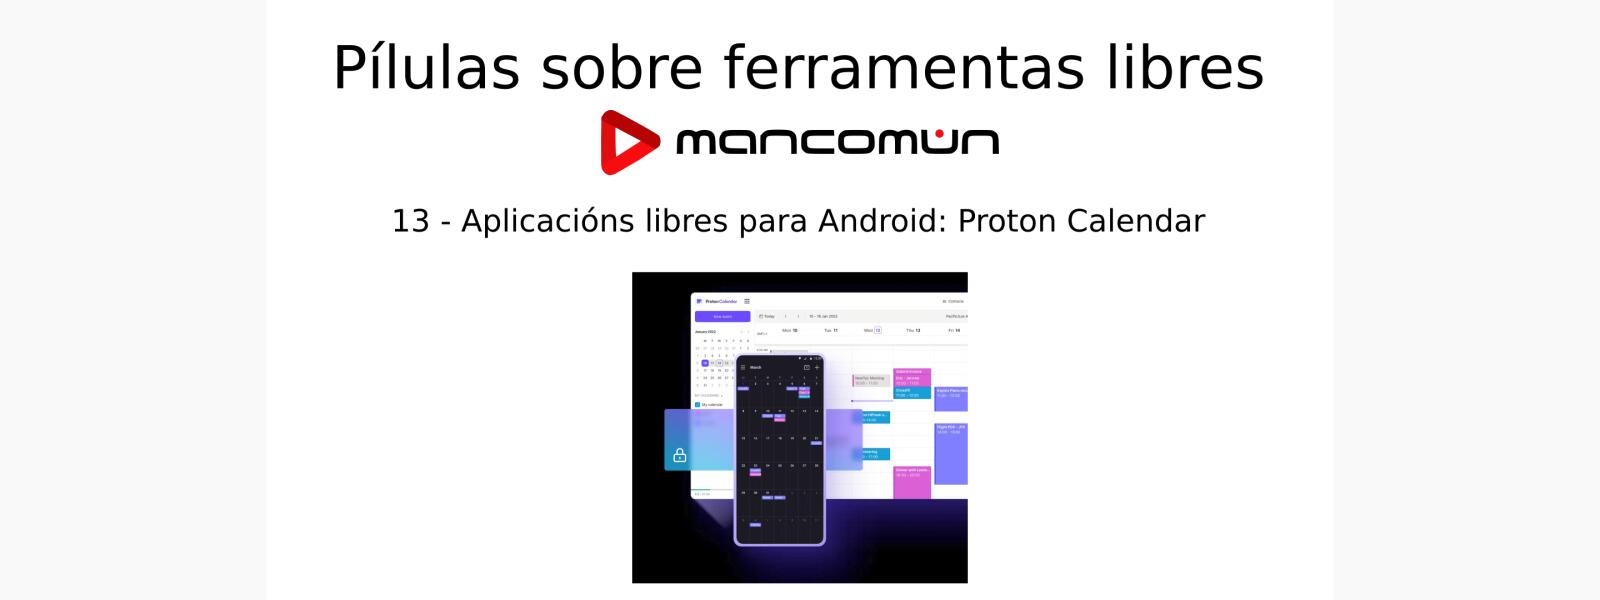 Aplicaciones libres para Android: Proton Calendar